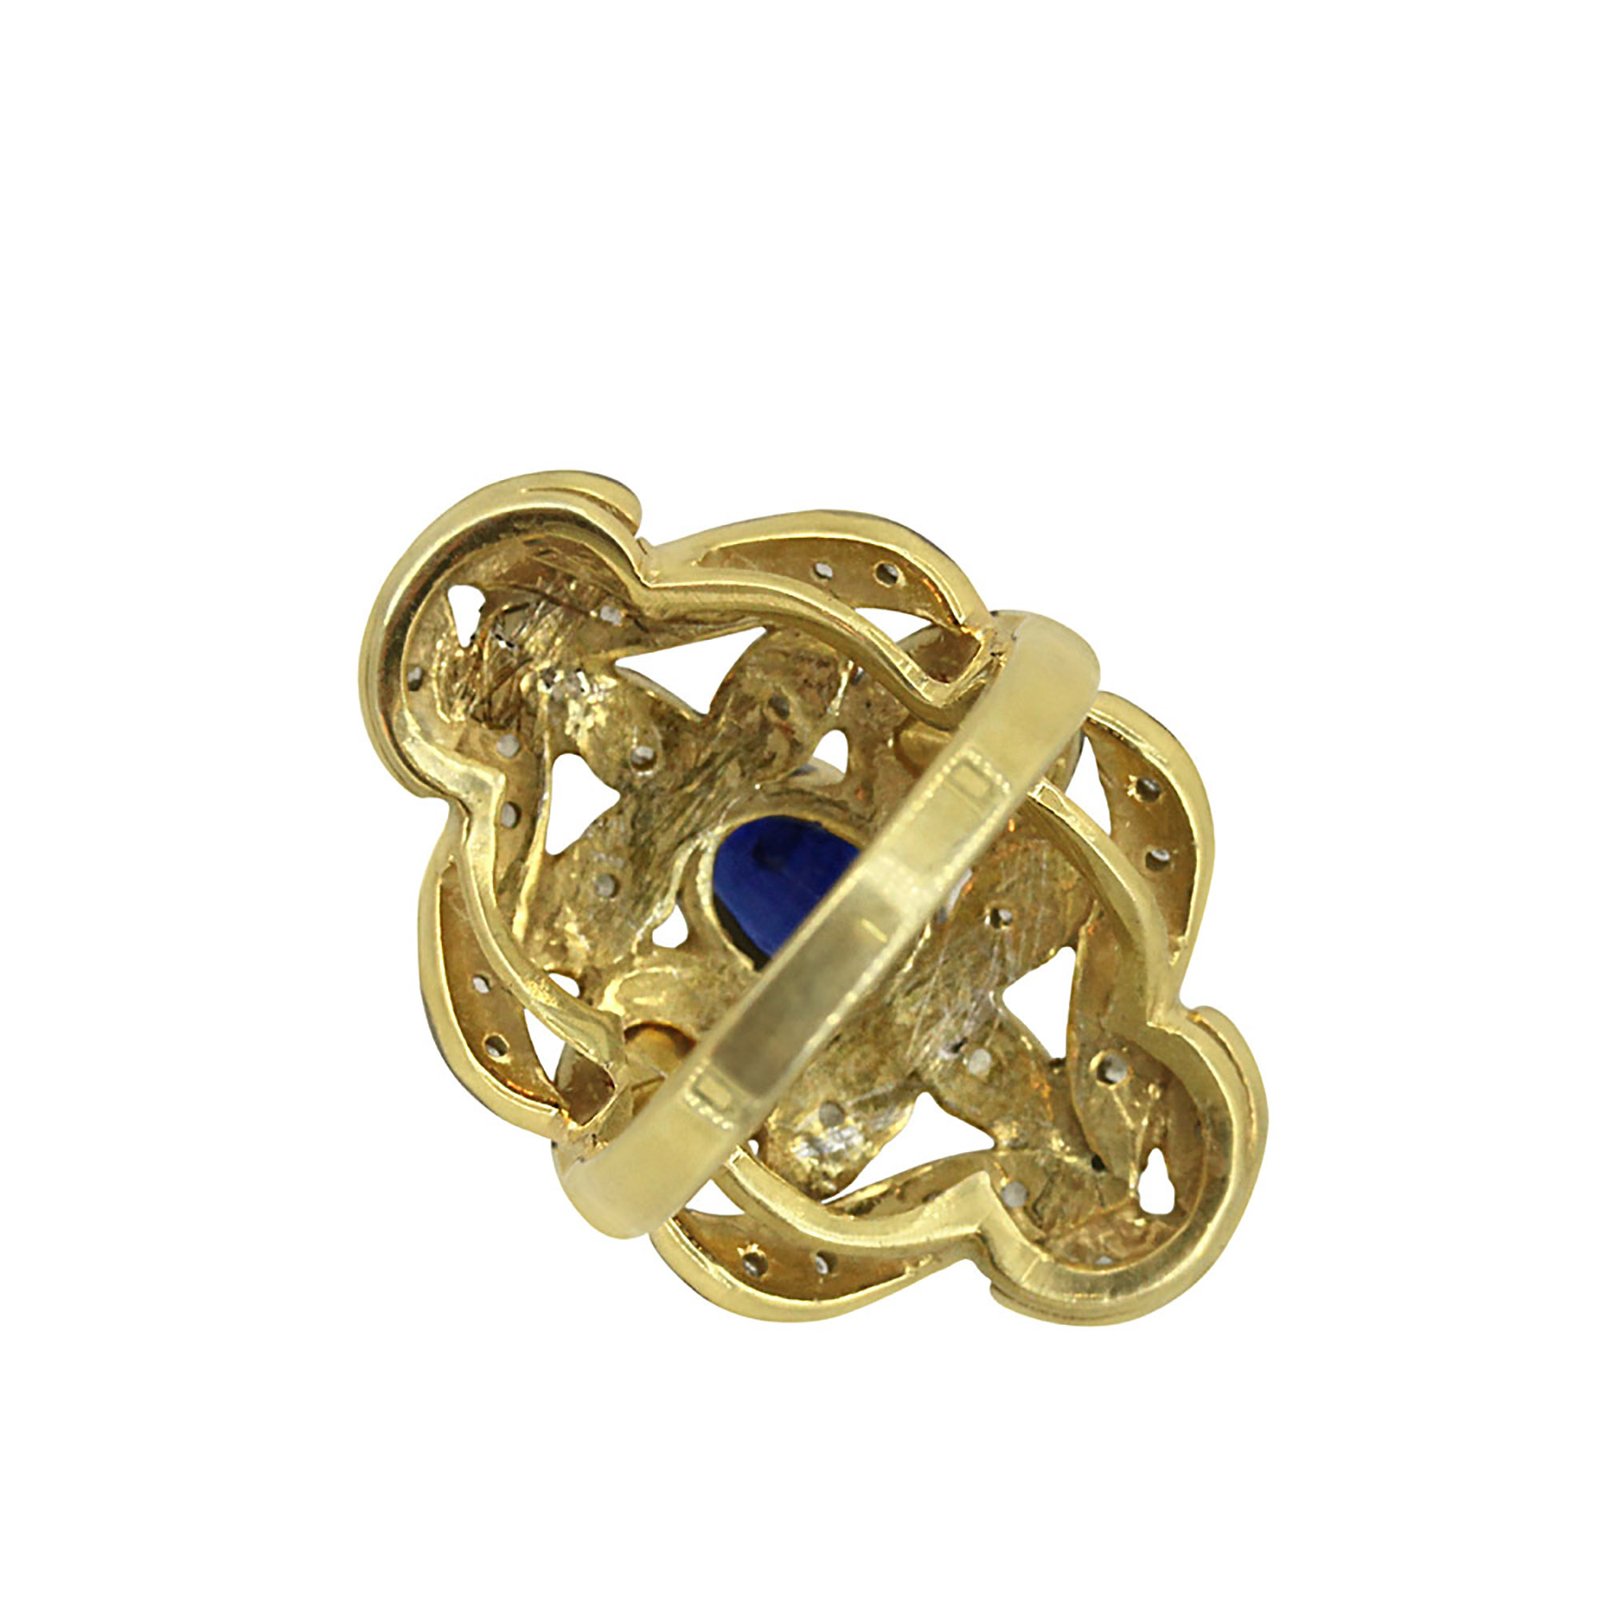 Blue sapphire diamond 925 sterling silver designer ring